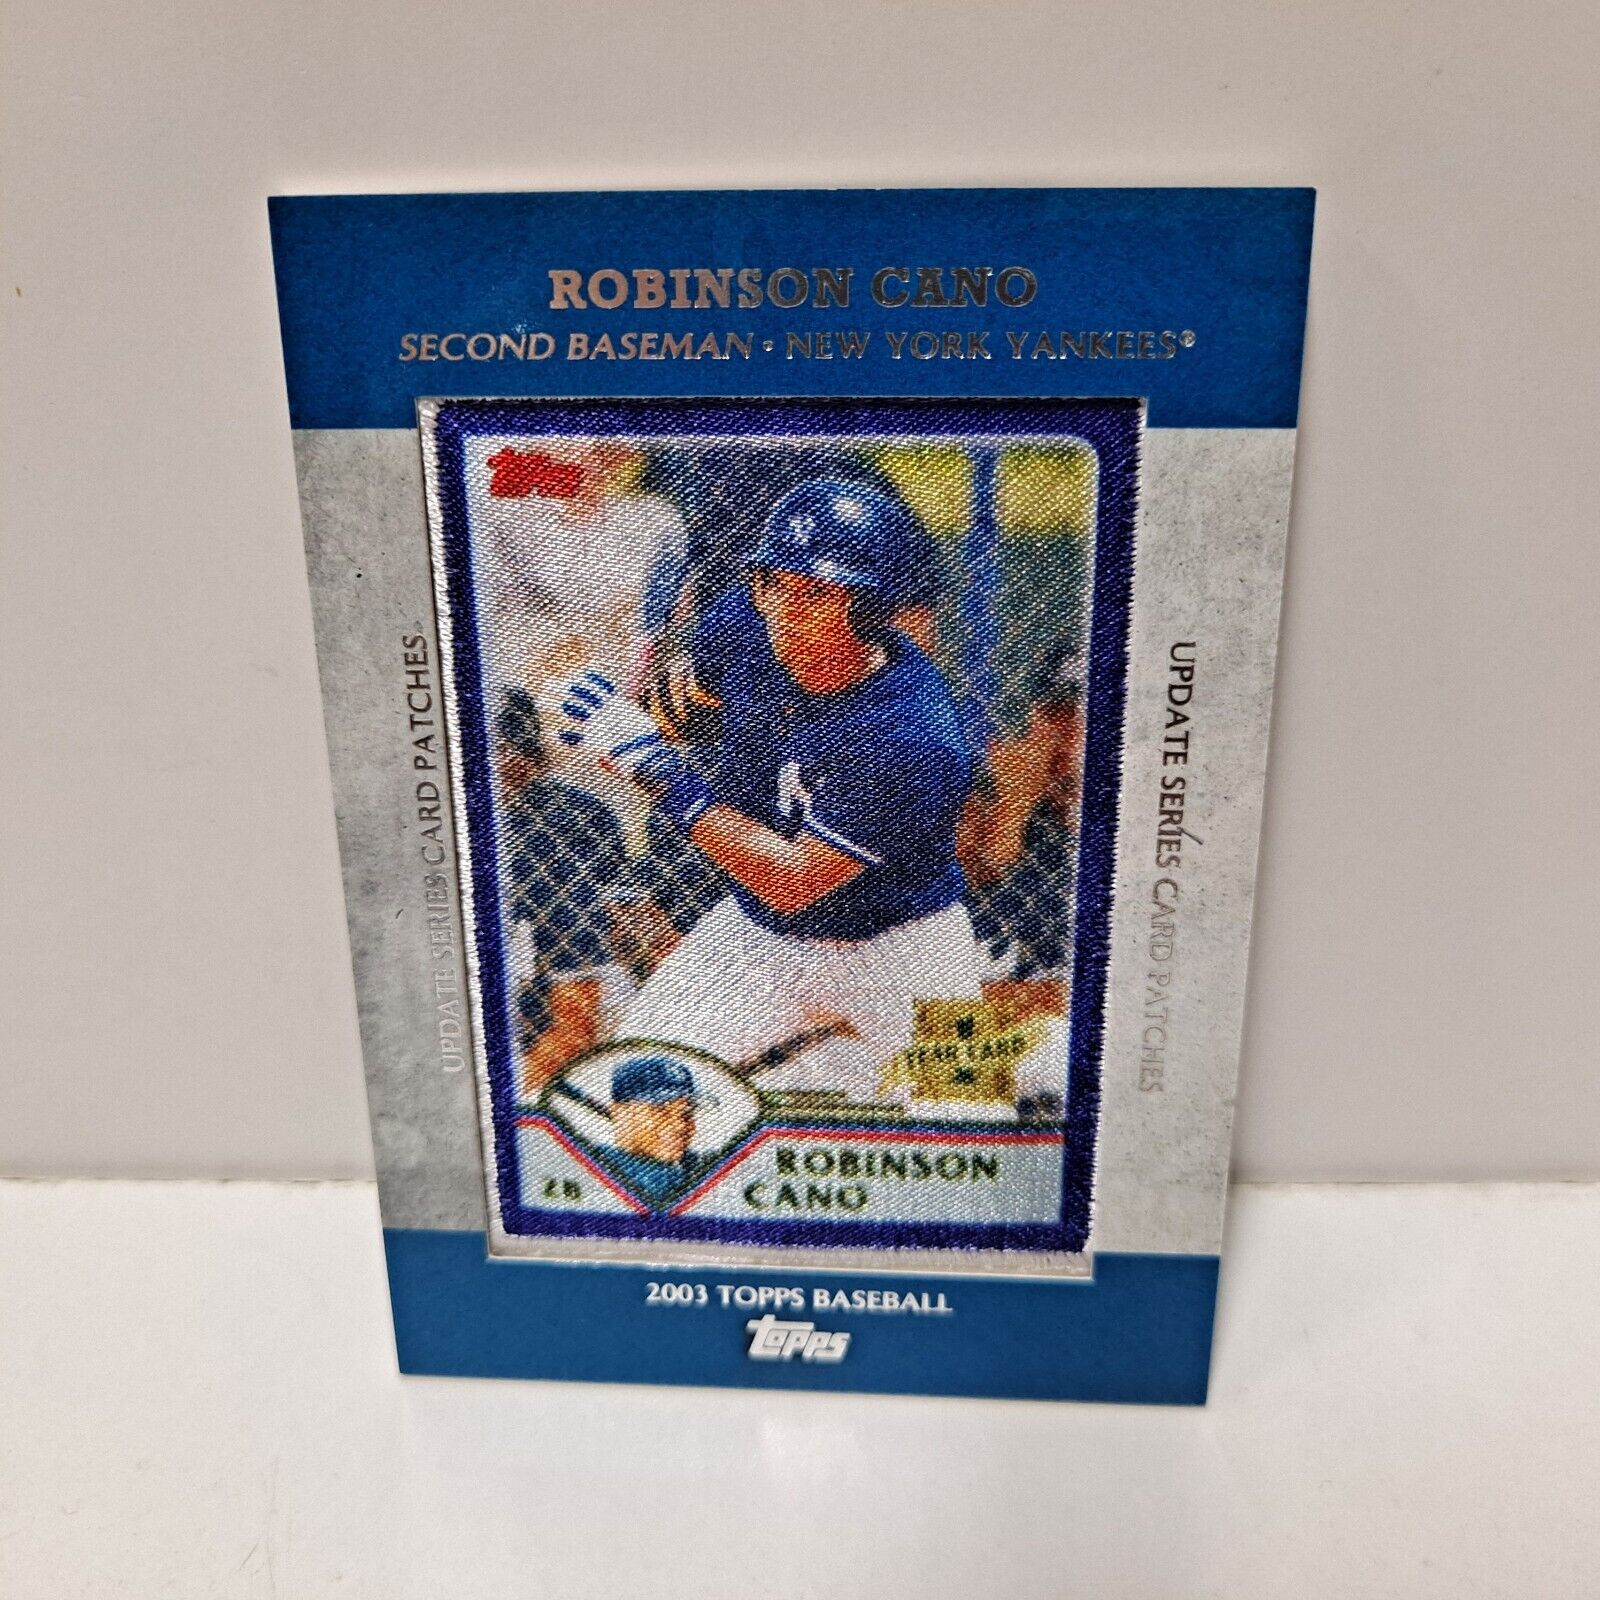 2013 Topps Robinson Cano Card Patch TRCP-7 Baseball Card NM